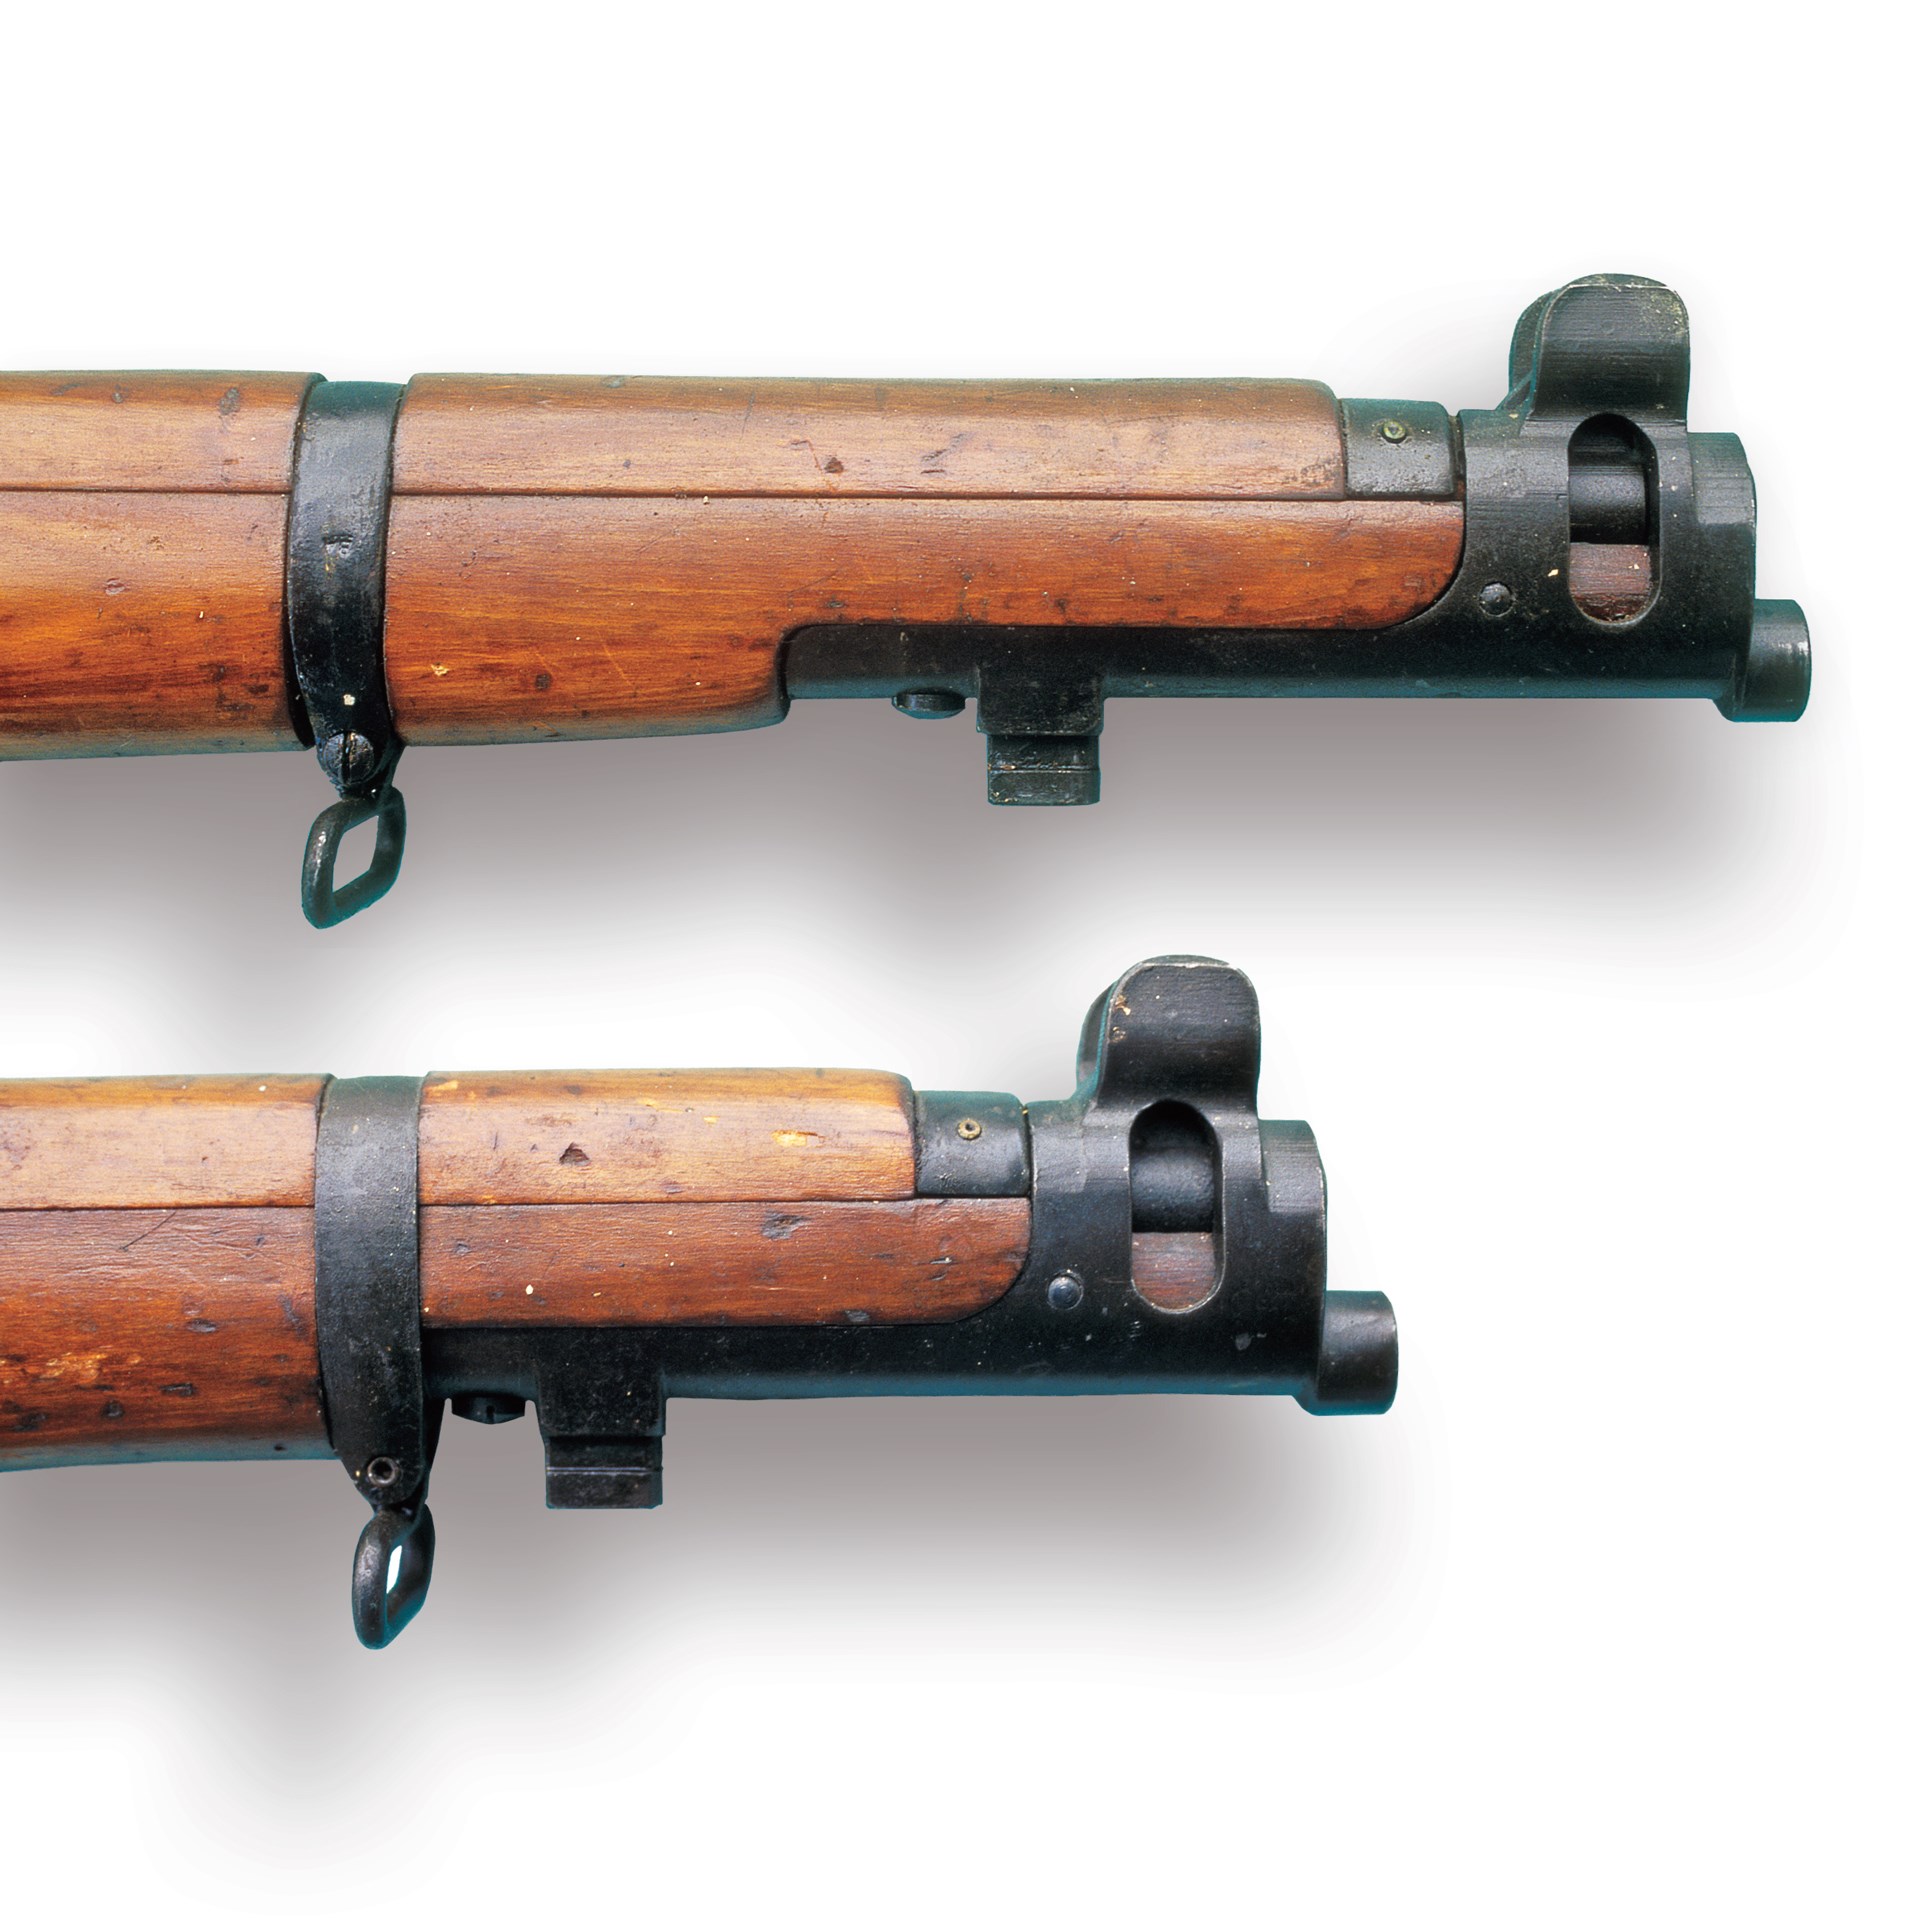 No. 1, Mk. III* ”intermediate rifle” fore-end, nosecap and bayonet lug shown above No. 1, Mk. III* ”shortened rifle” fore-end, nosecap and bayonet lug